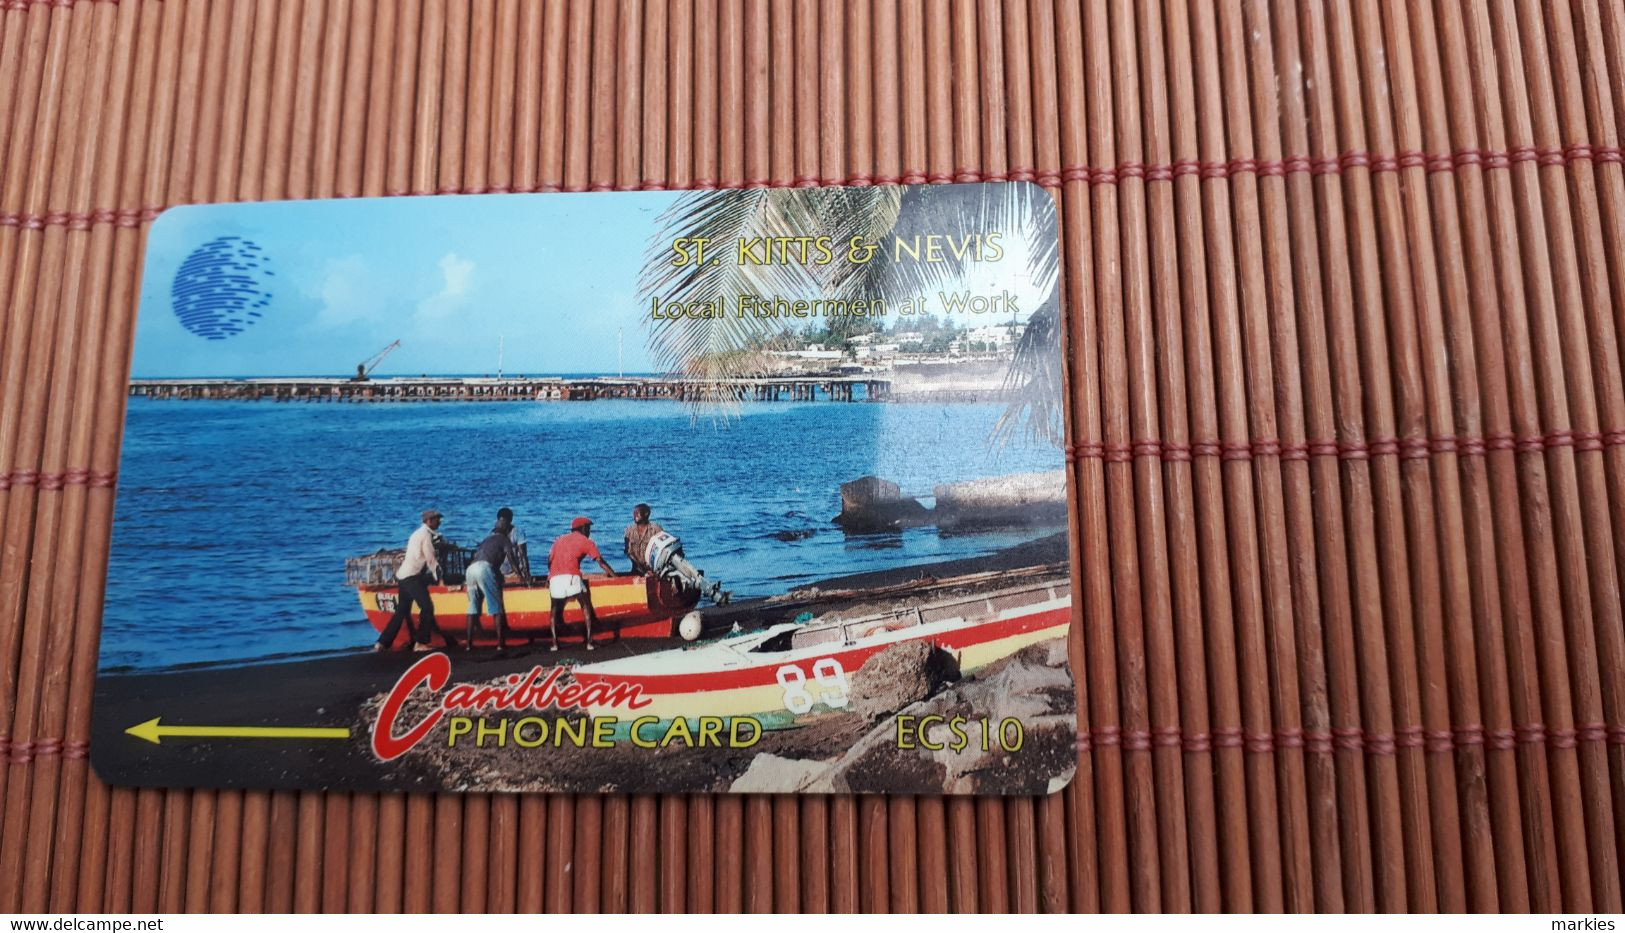 Phonecard ST Kits & Nevis 6CSKA Used Rare - St. Kitts & Nevis